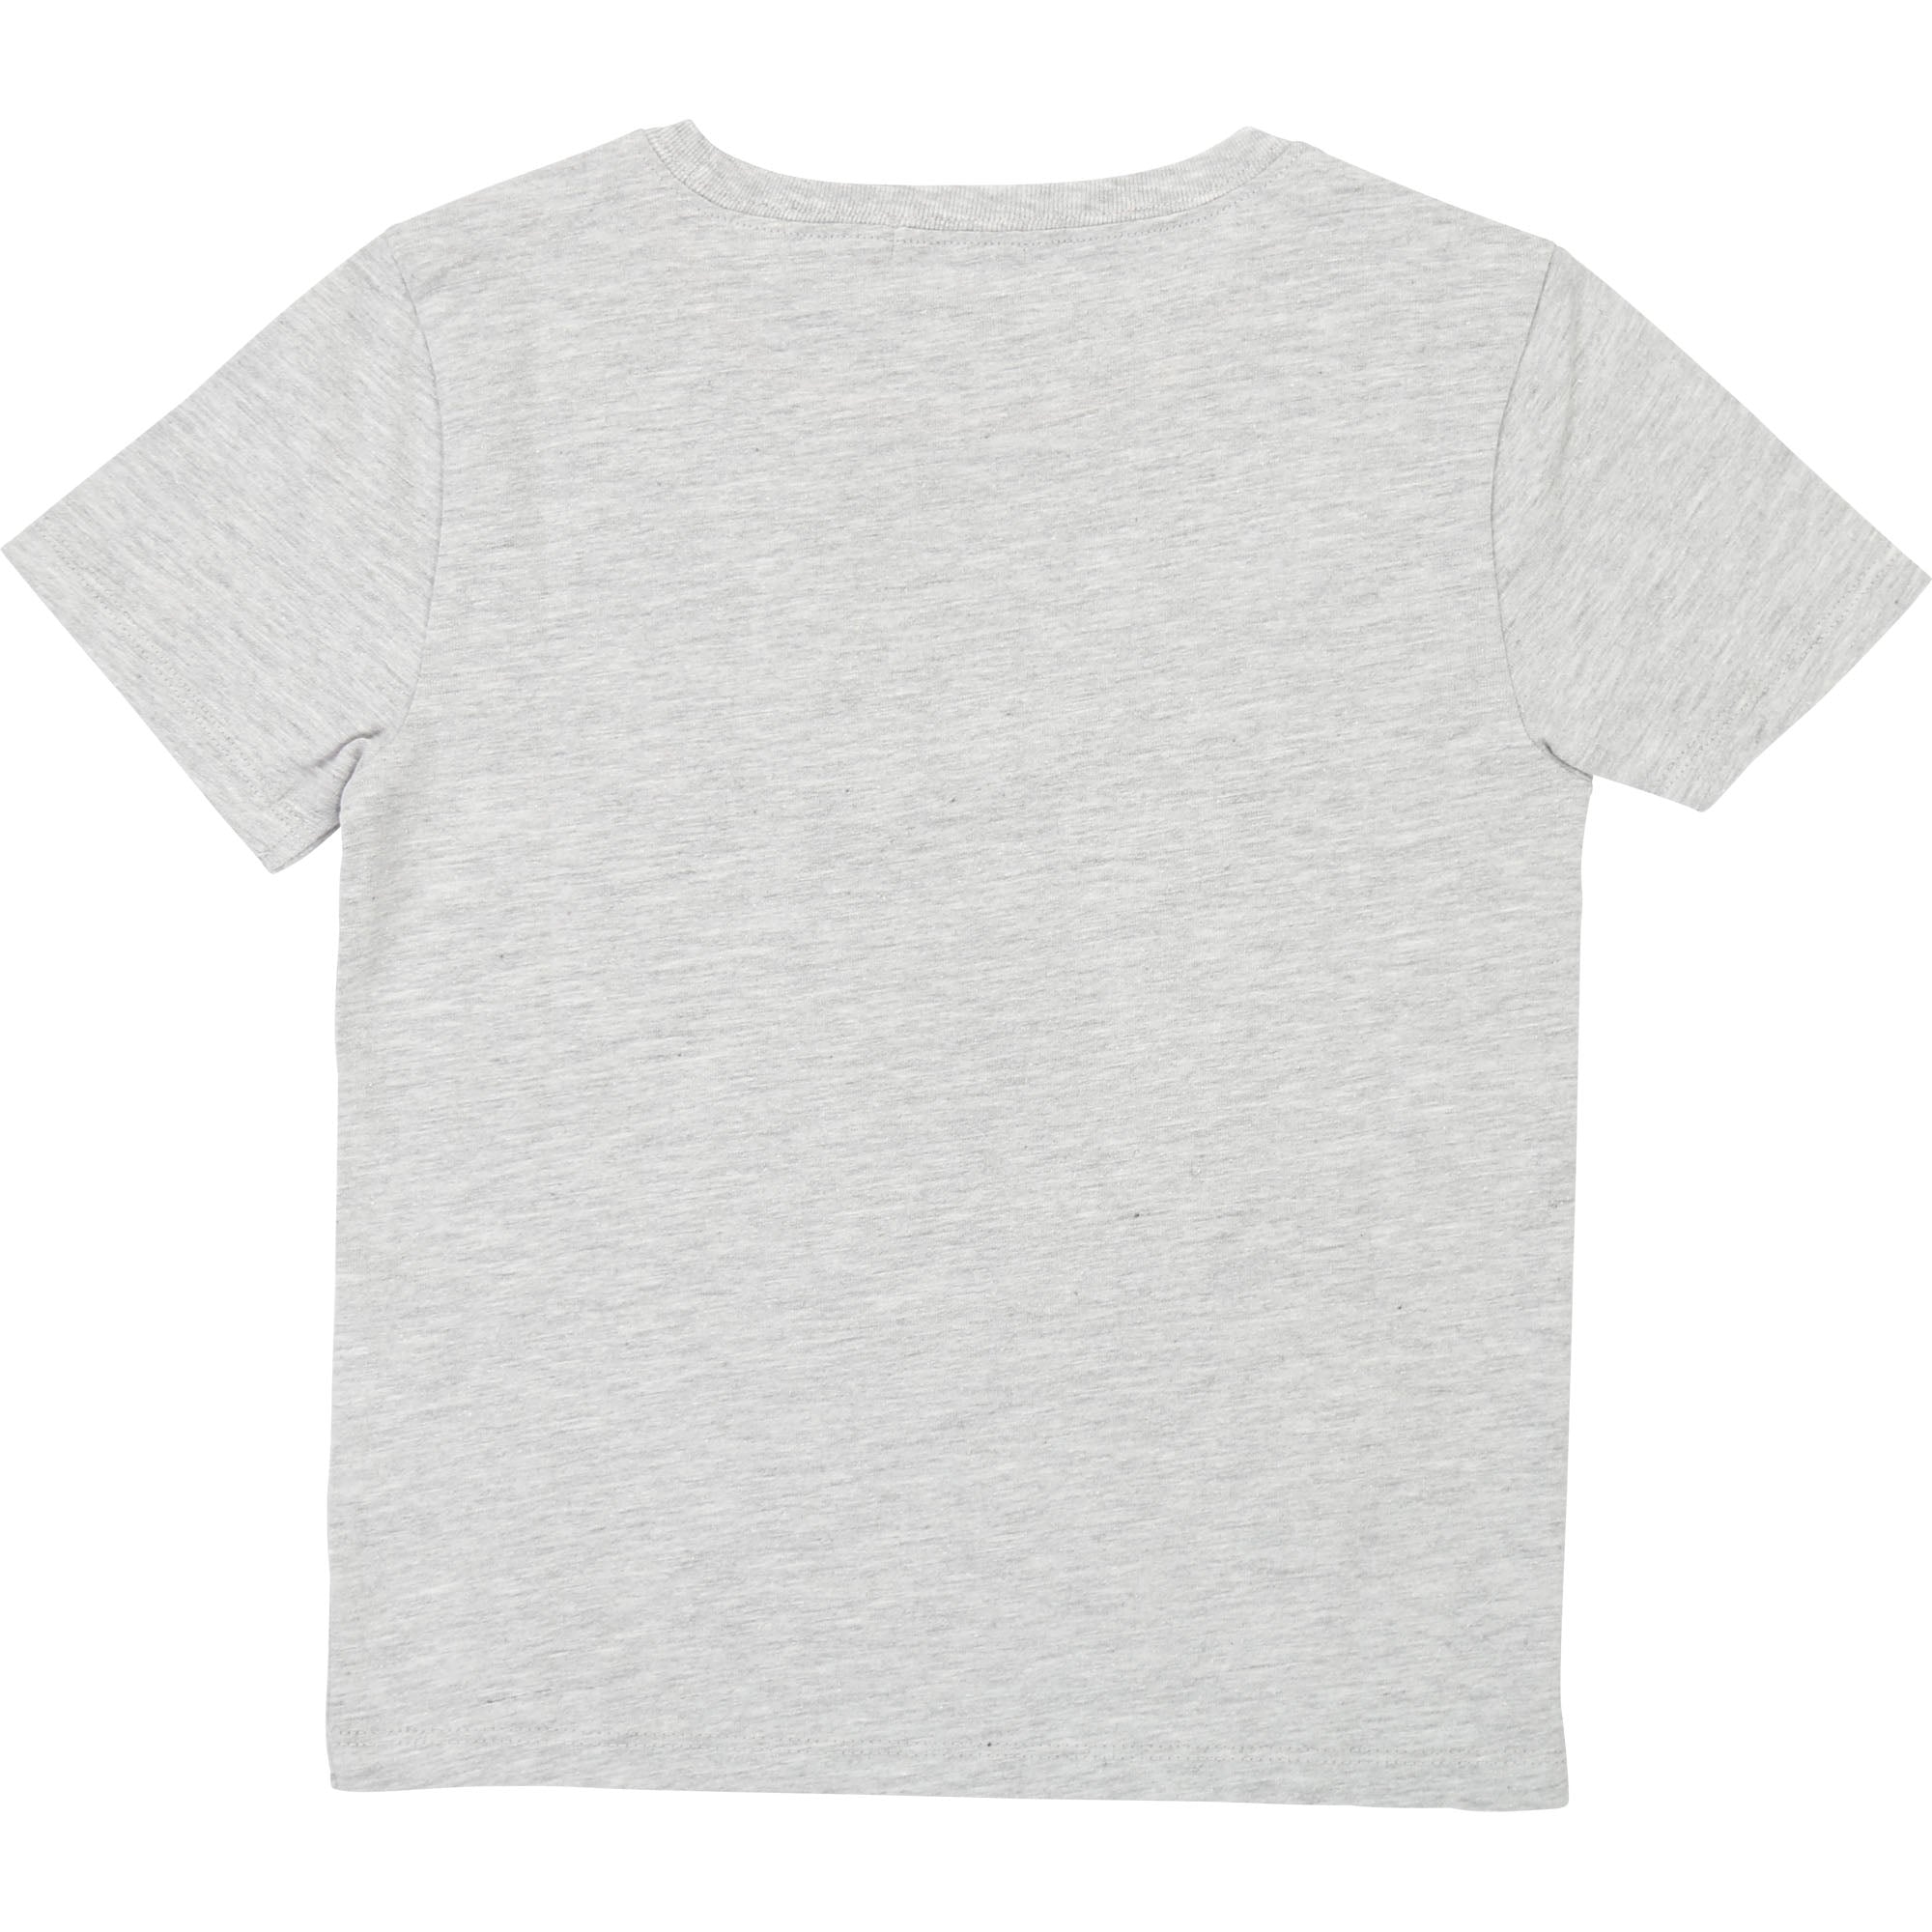 Boys Grey Printed Cotton T-shirt